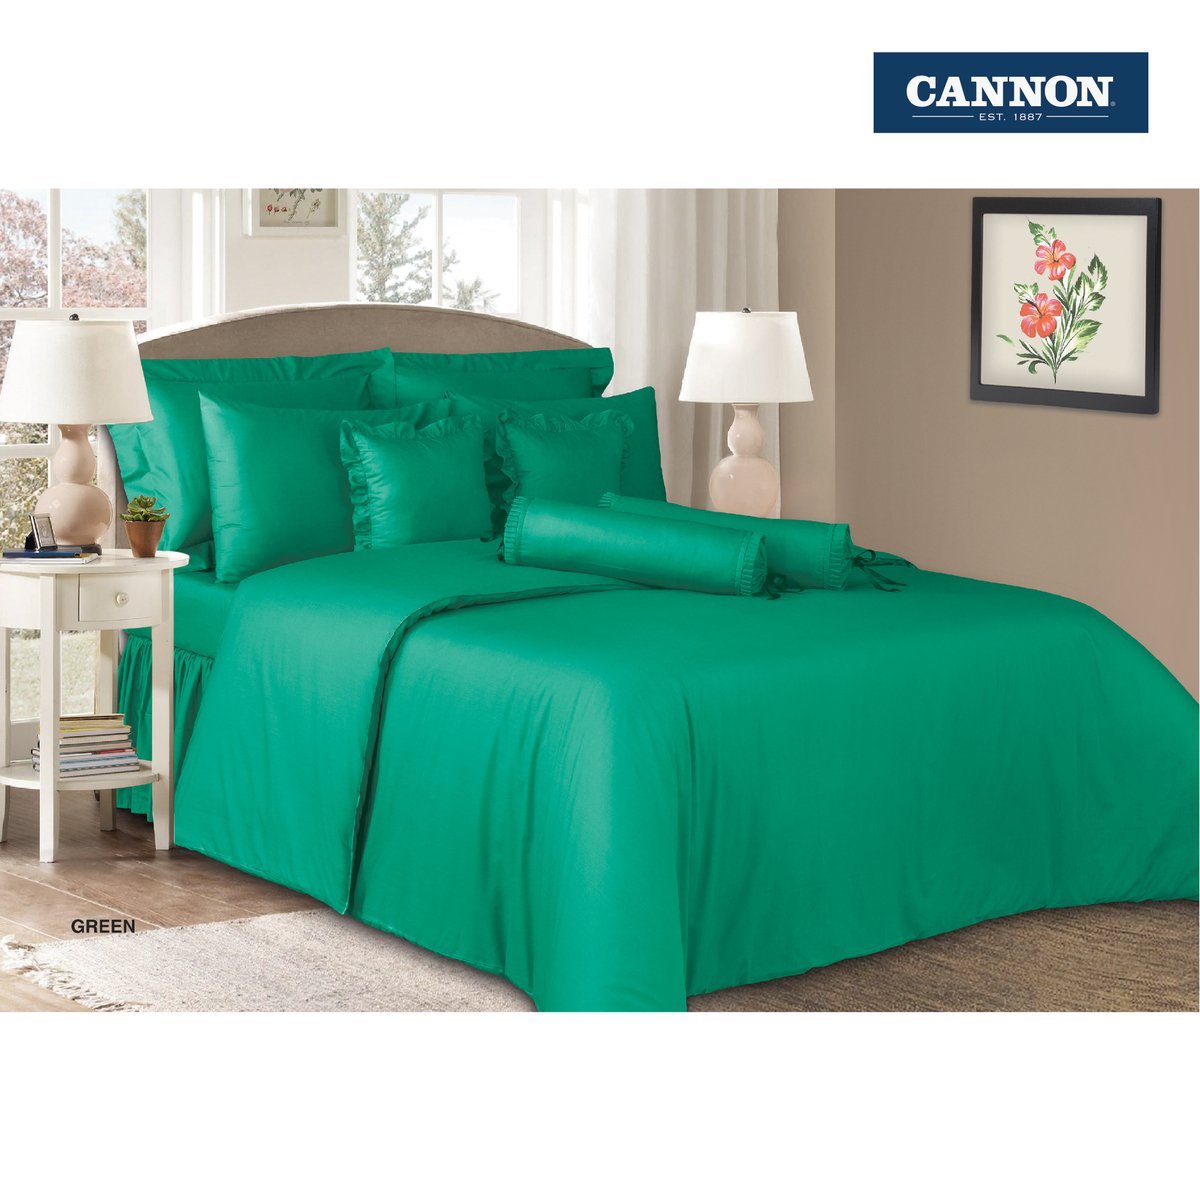 Cannon Comforter Plain King 220x240cm Green